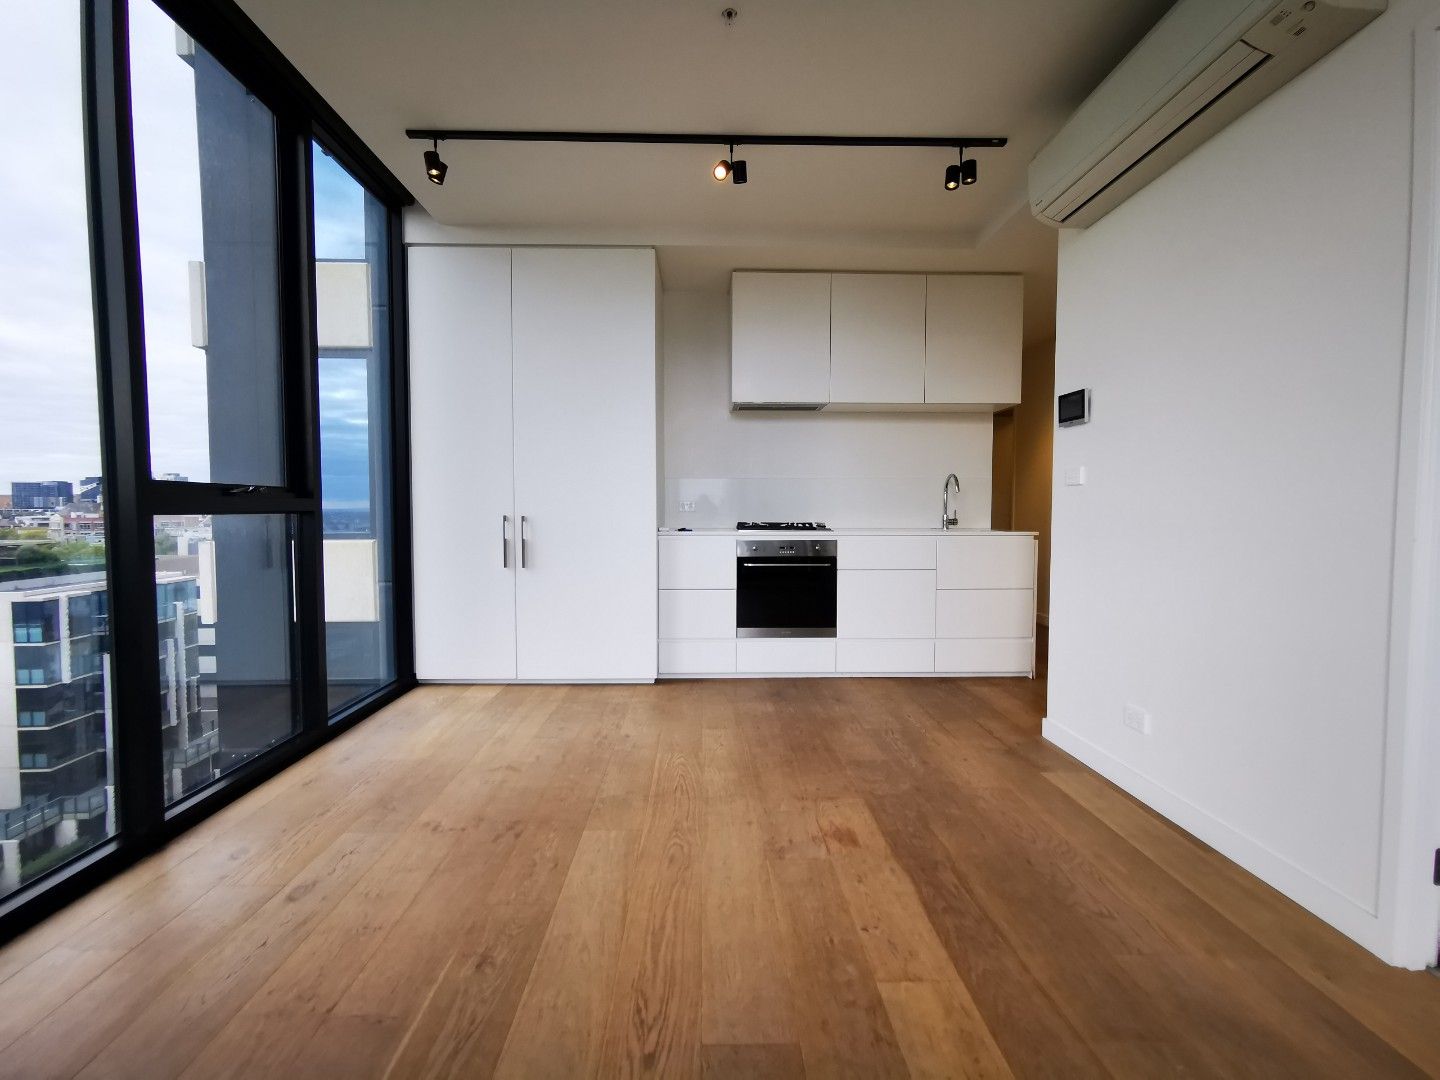 2 bedrooms Apartment / Unit / Flat in 1006/65 Dudley WEST MELBOURNE VIC, 3003